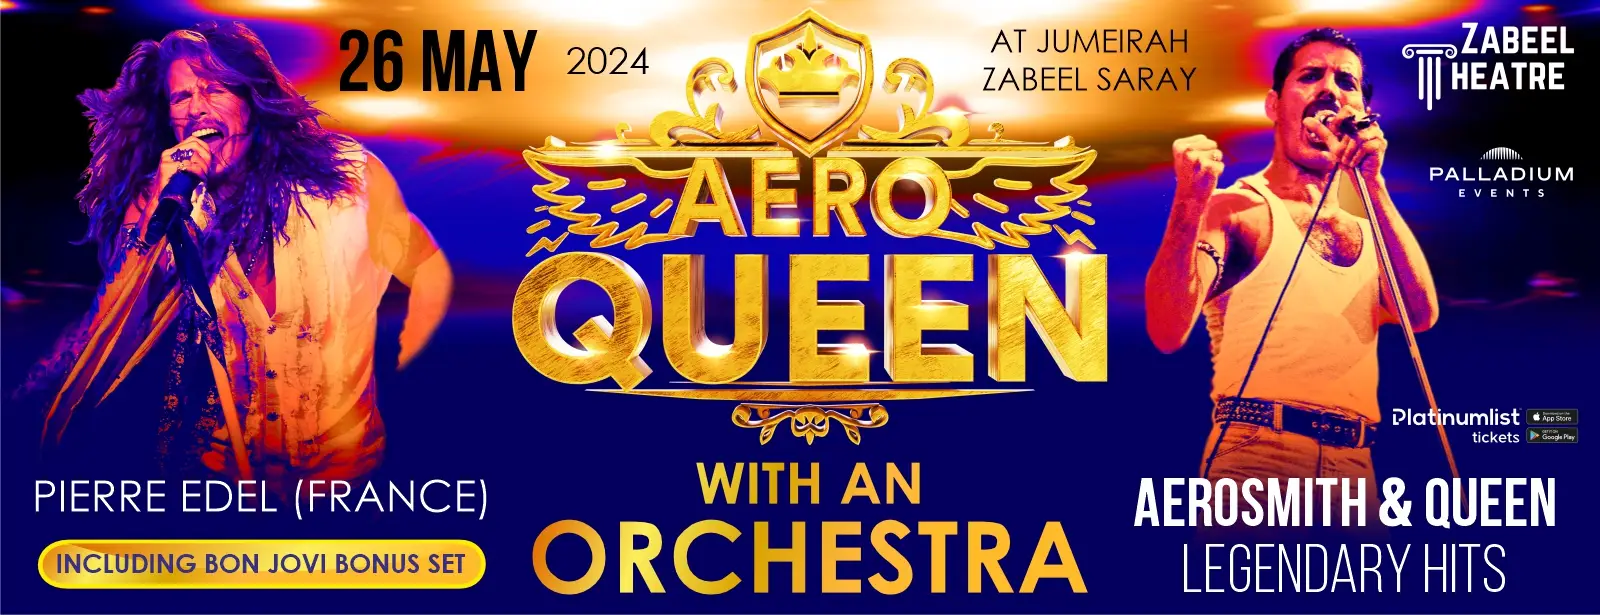 AEROQUEEN - Legendary Hits of Aerosmith & Queen || Wow-Emirates